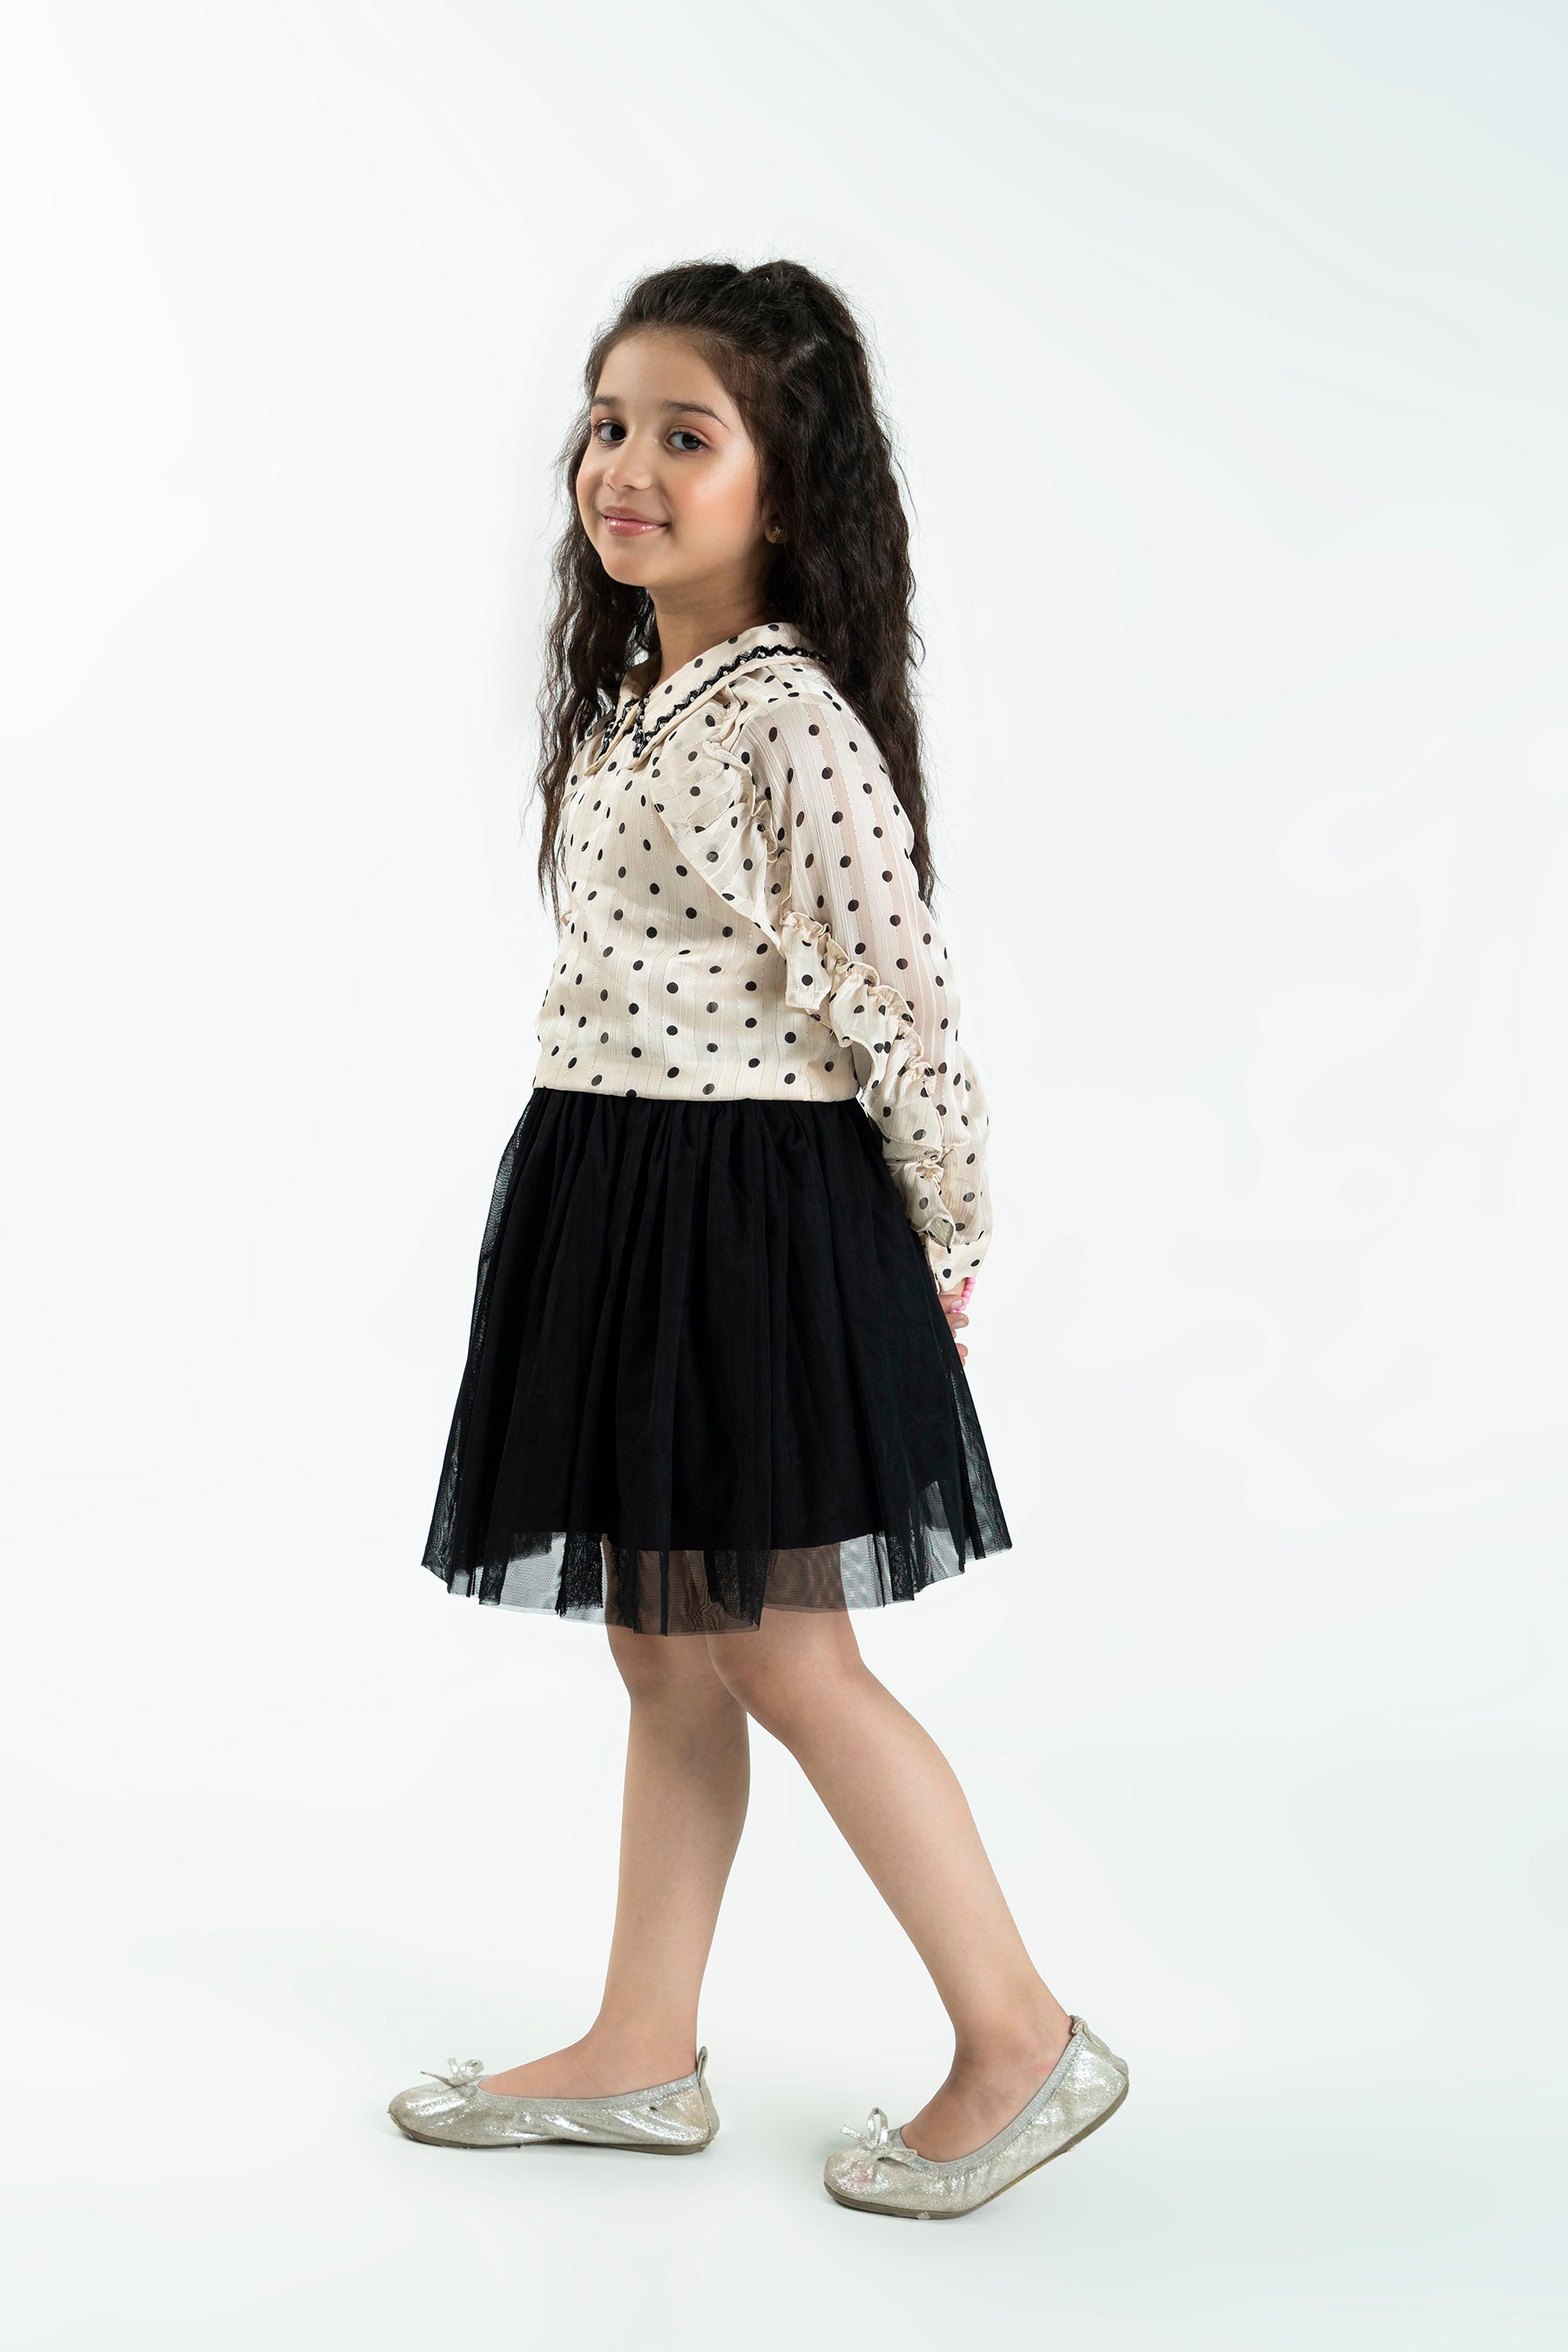 Embellished Top & skirt (MMB-S35)